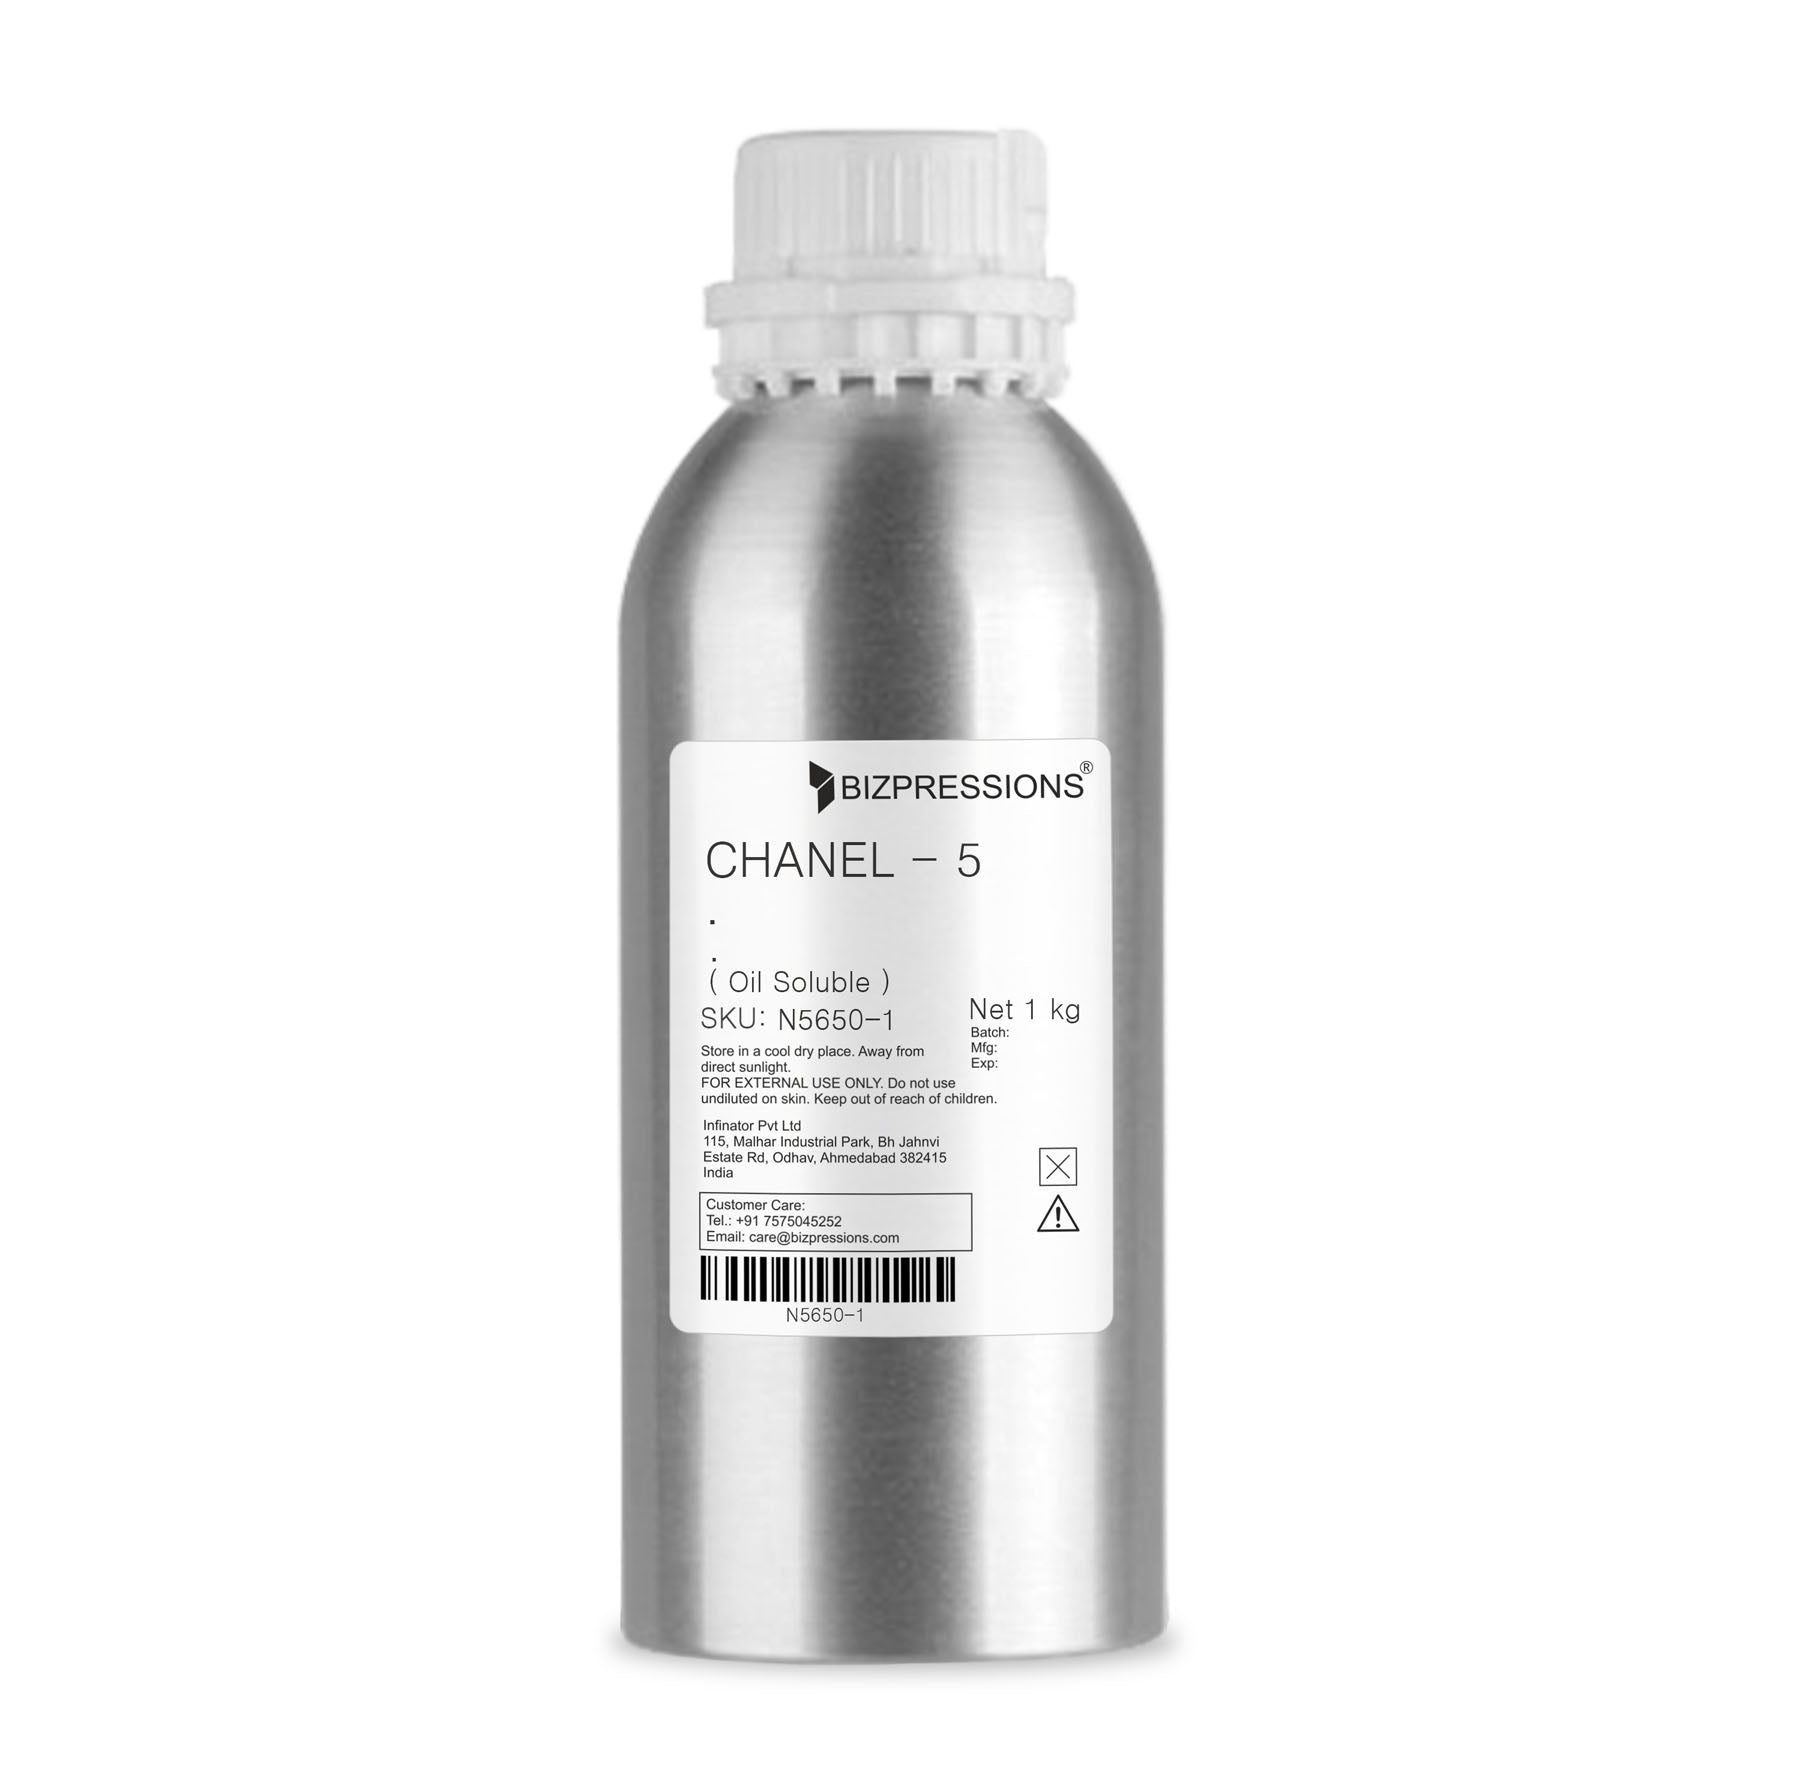 CHANEL - 5 - Fragrance ( Oil Soluble ) - 1 kg